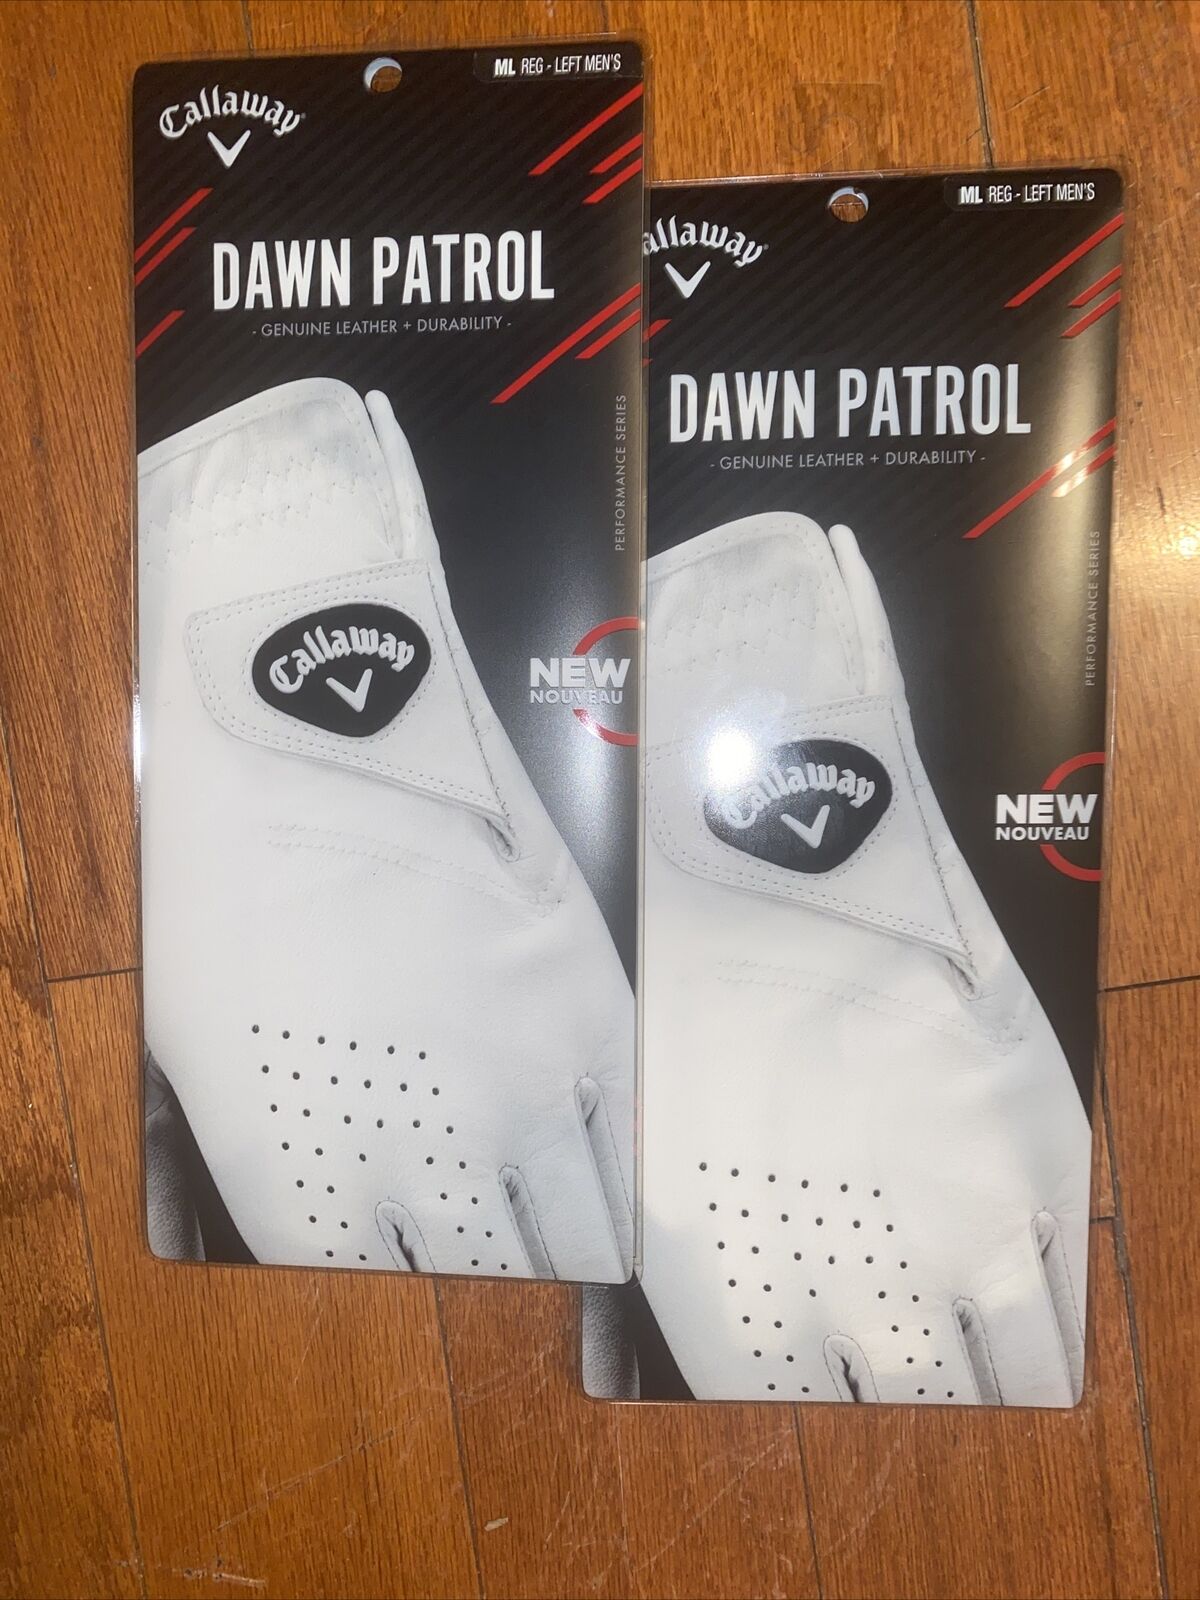 2 Pack NEW EDTN Callaway Dawn Patrol Mens Golf Glove LEFT Hand (both) sz M/L